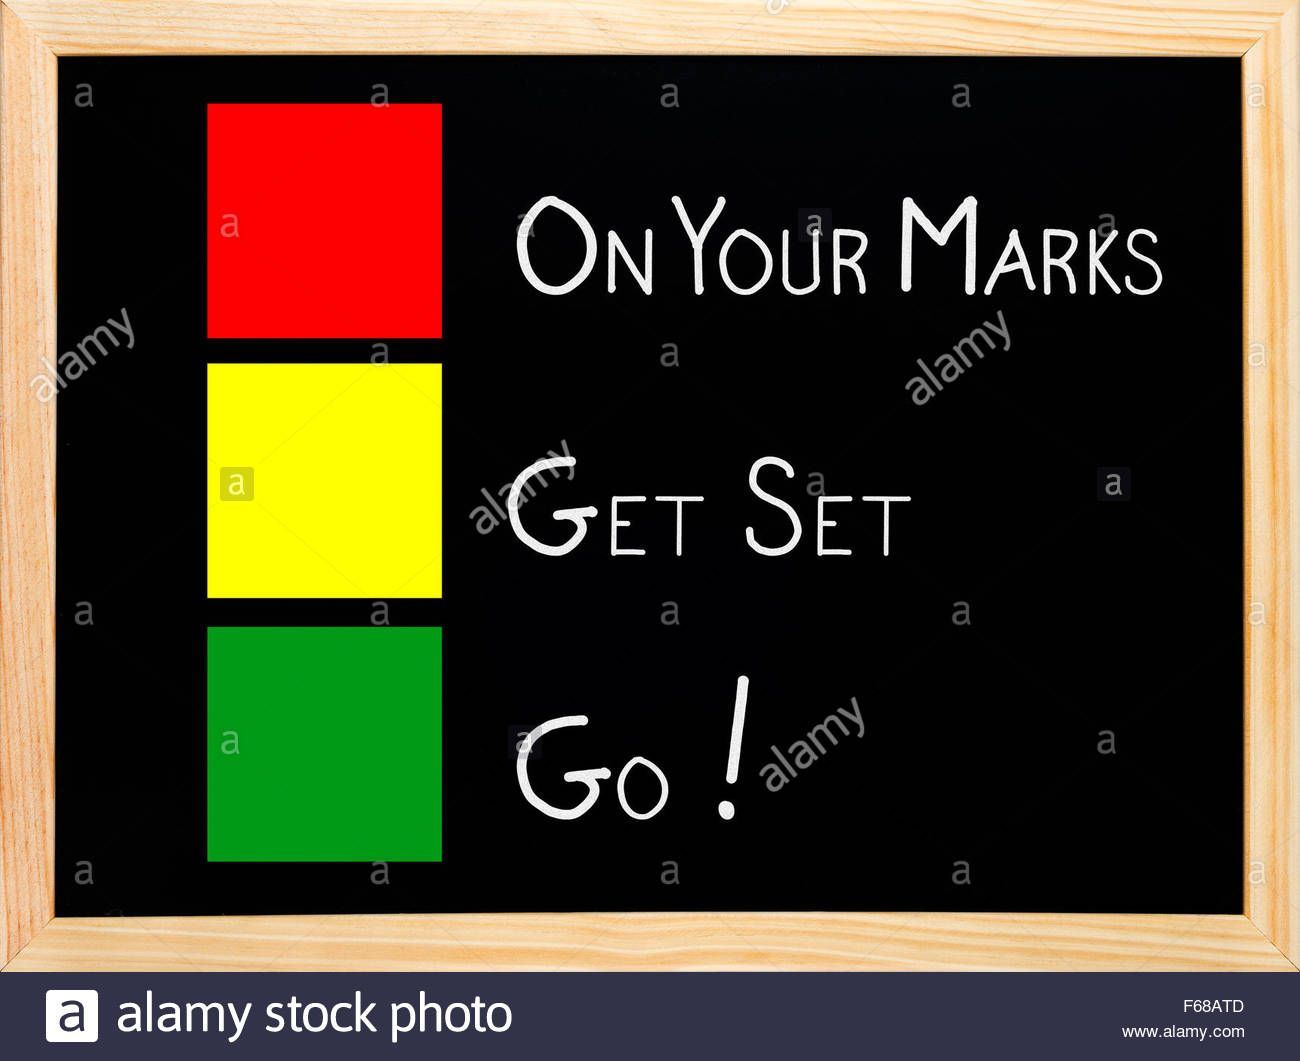 On your mark get set go written on blackboard or chalkboard with traffic F68ATD